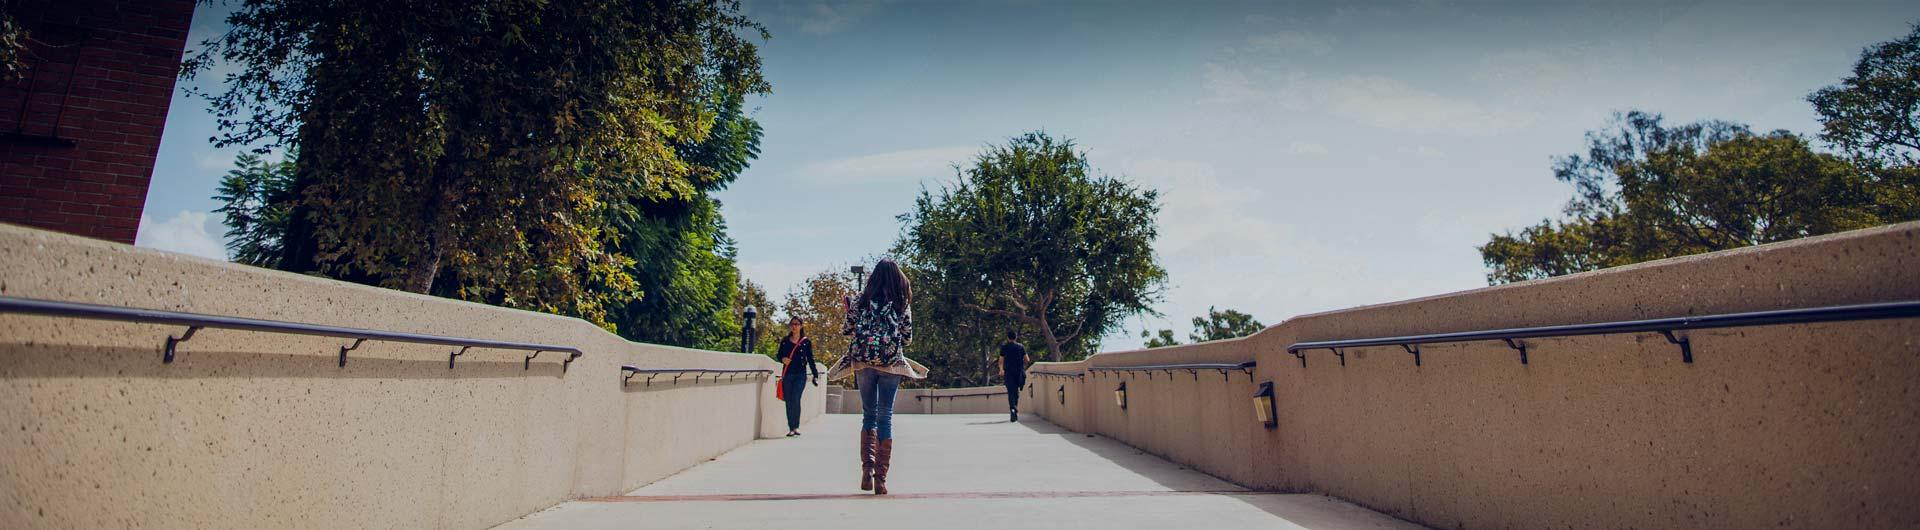 CSULB Students walking on bridge